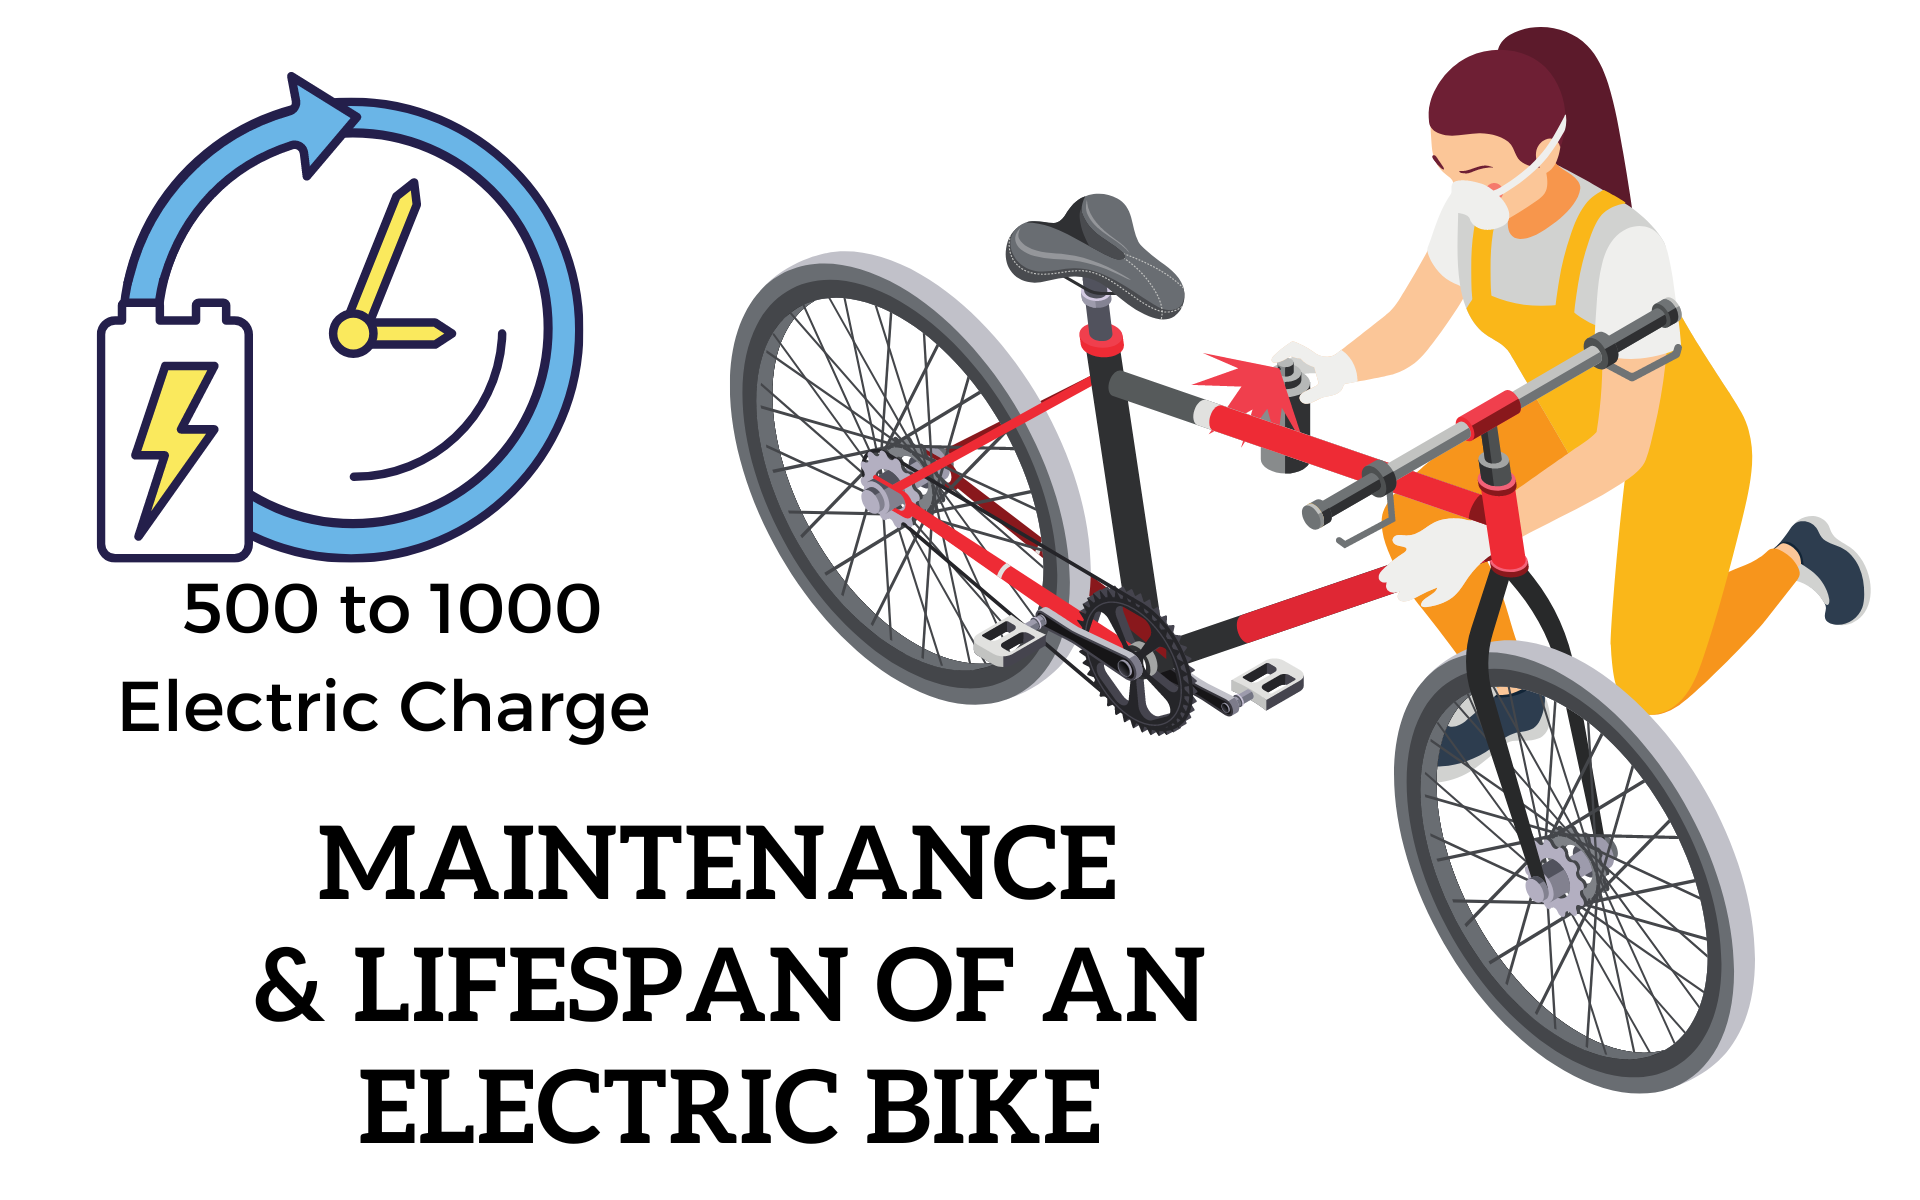 Maintenance & Lifespan of an Electric Bike